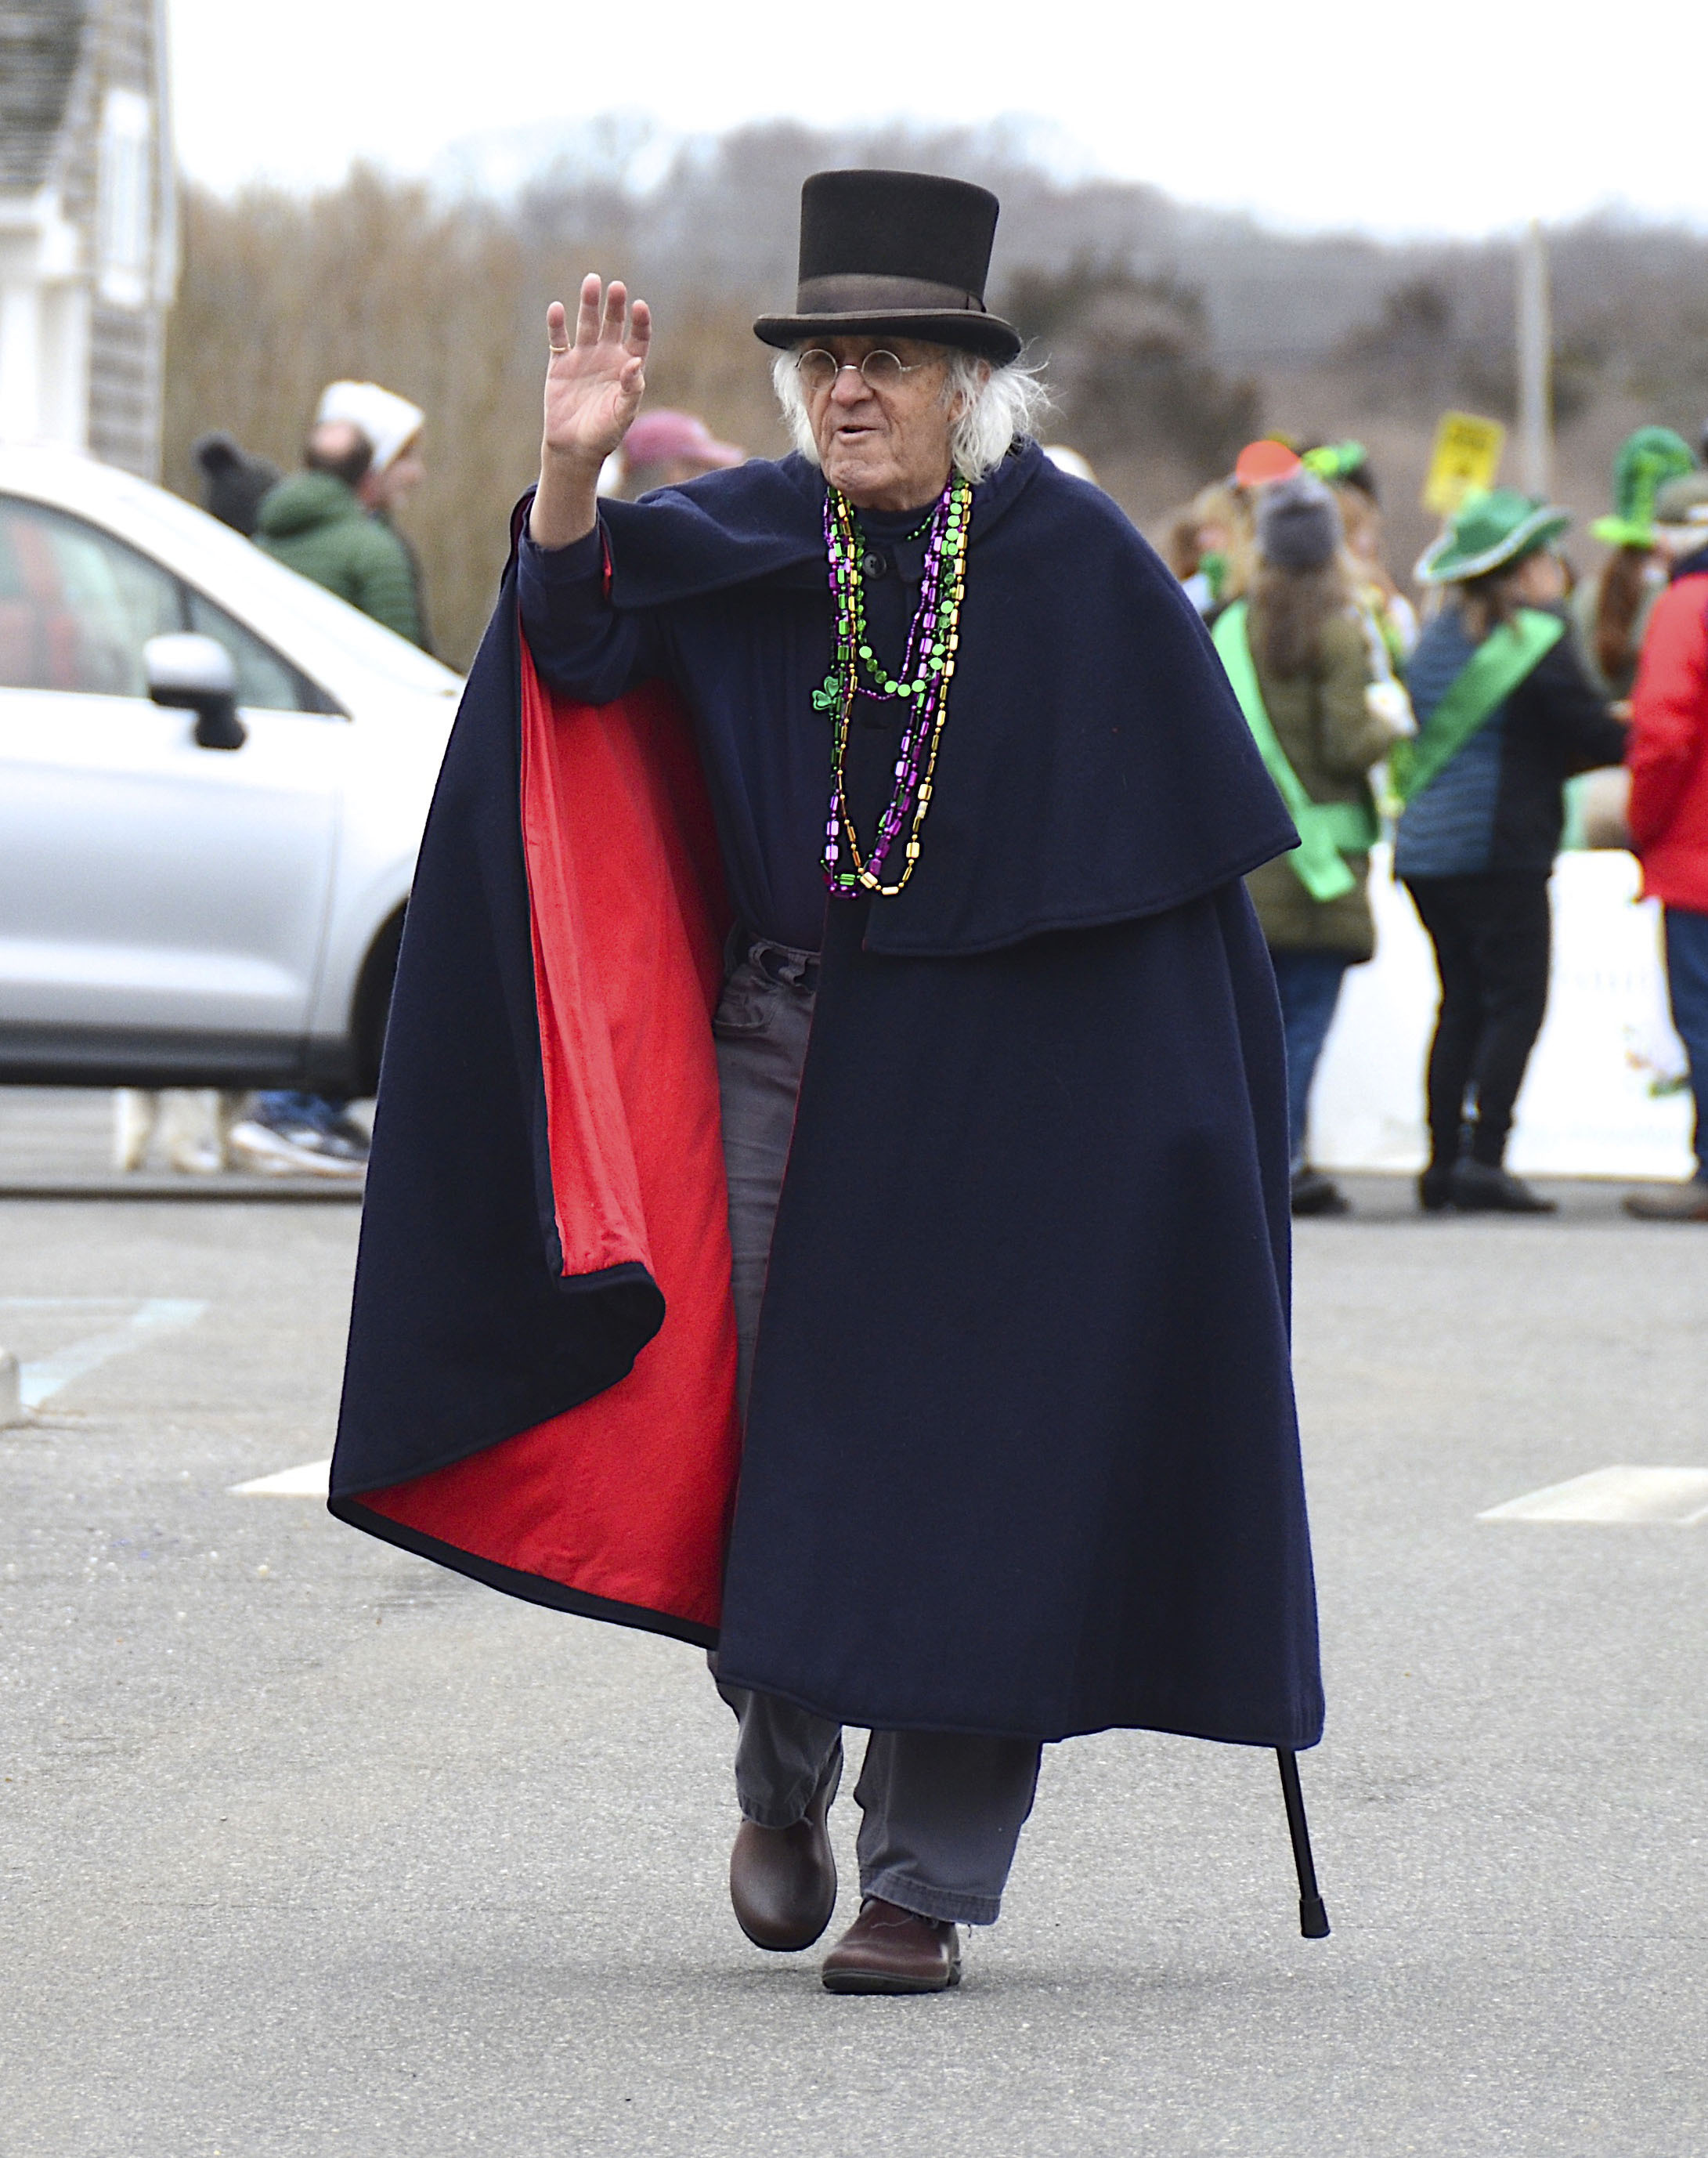 Hugh King during the Am O'Gansett St. Patrick's Day parade.